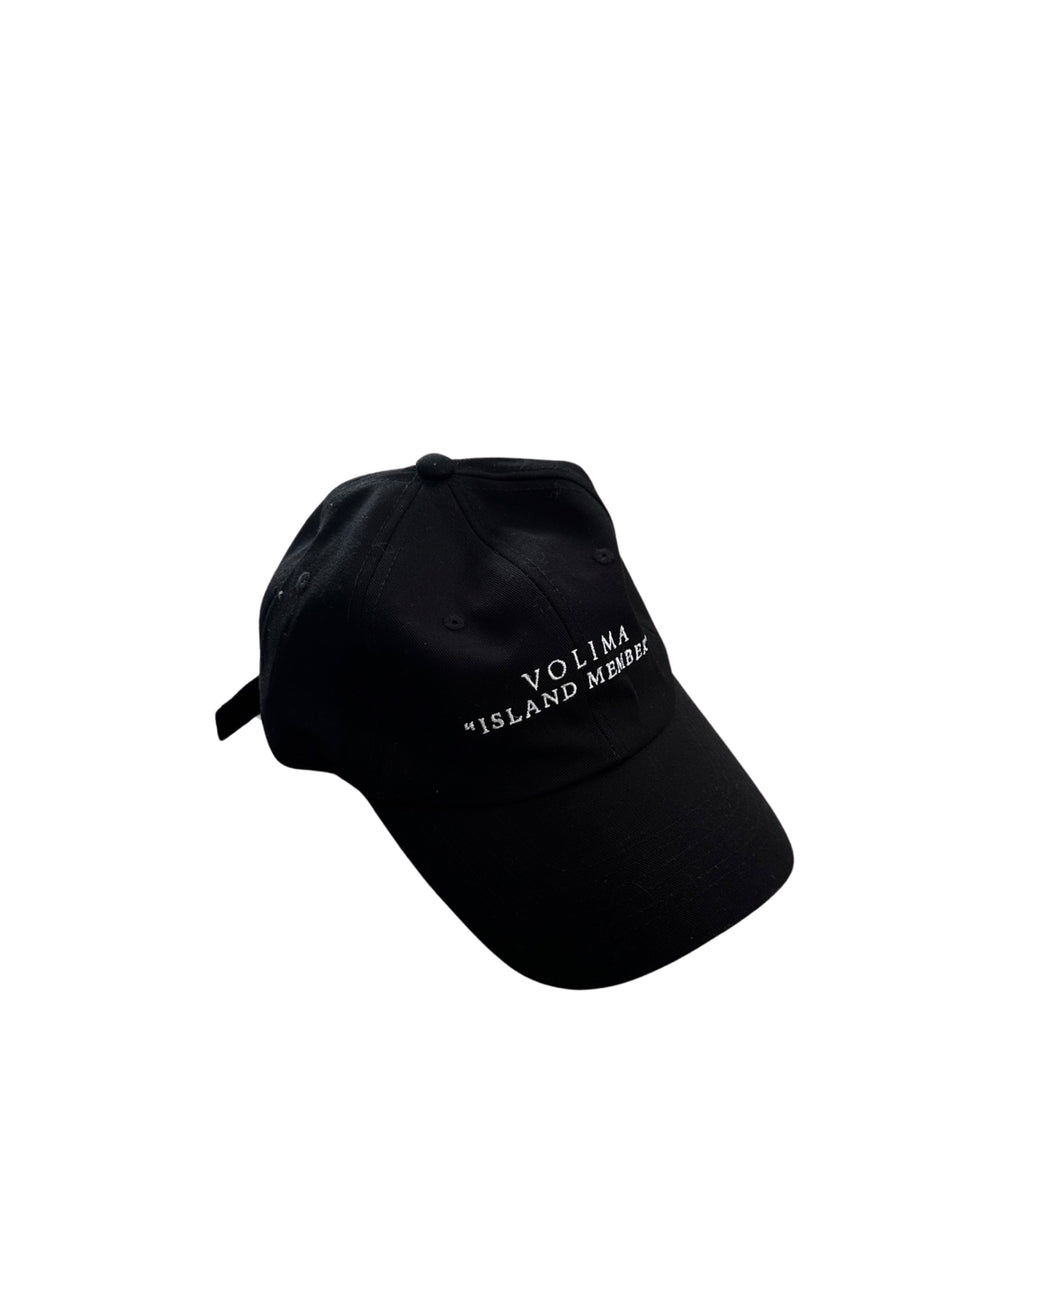 Volima “Island Member” cap - Black